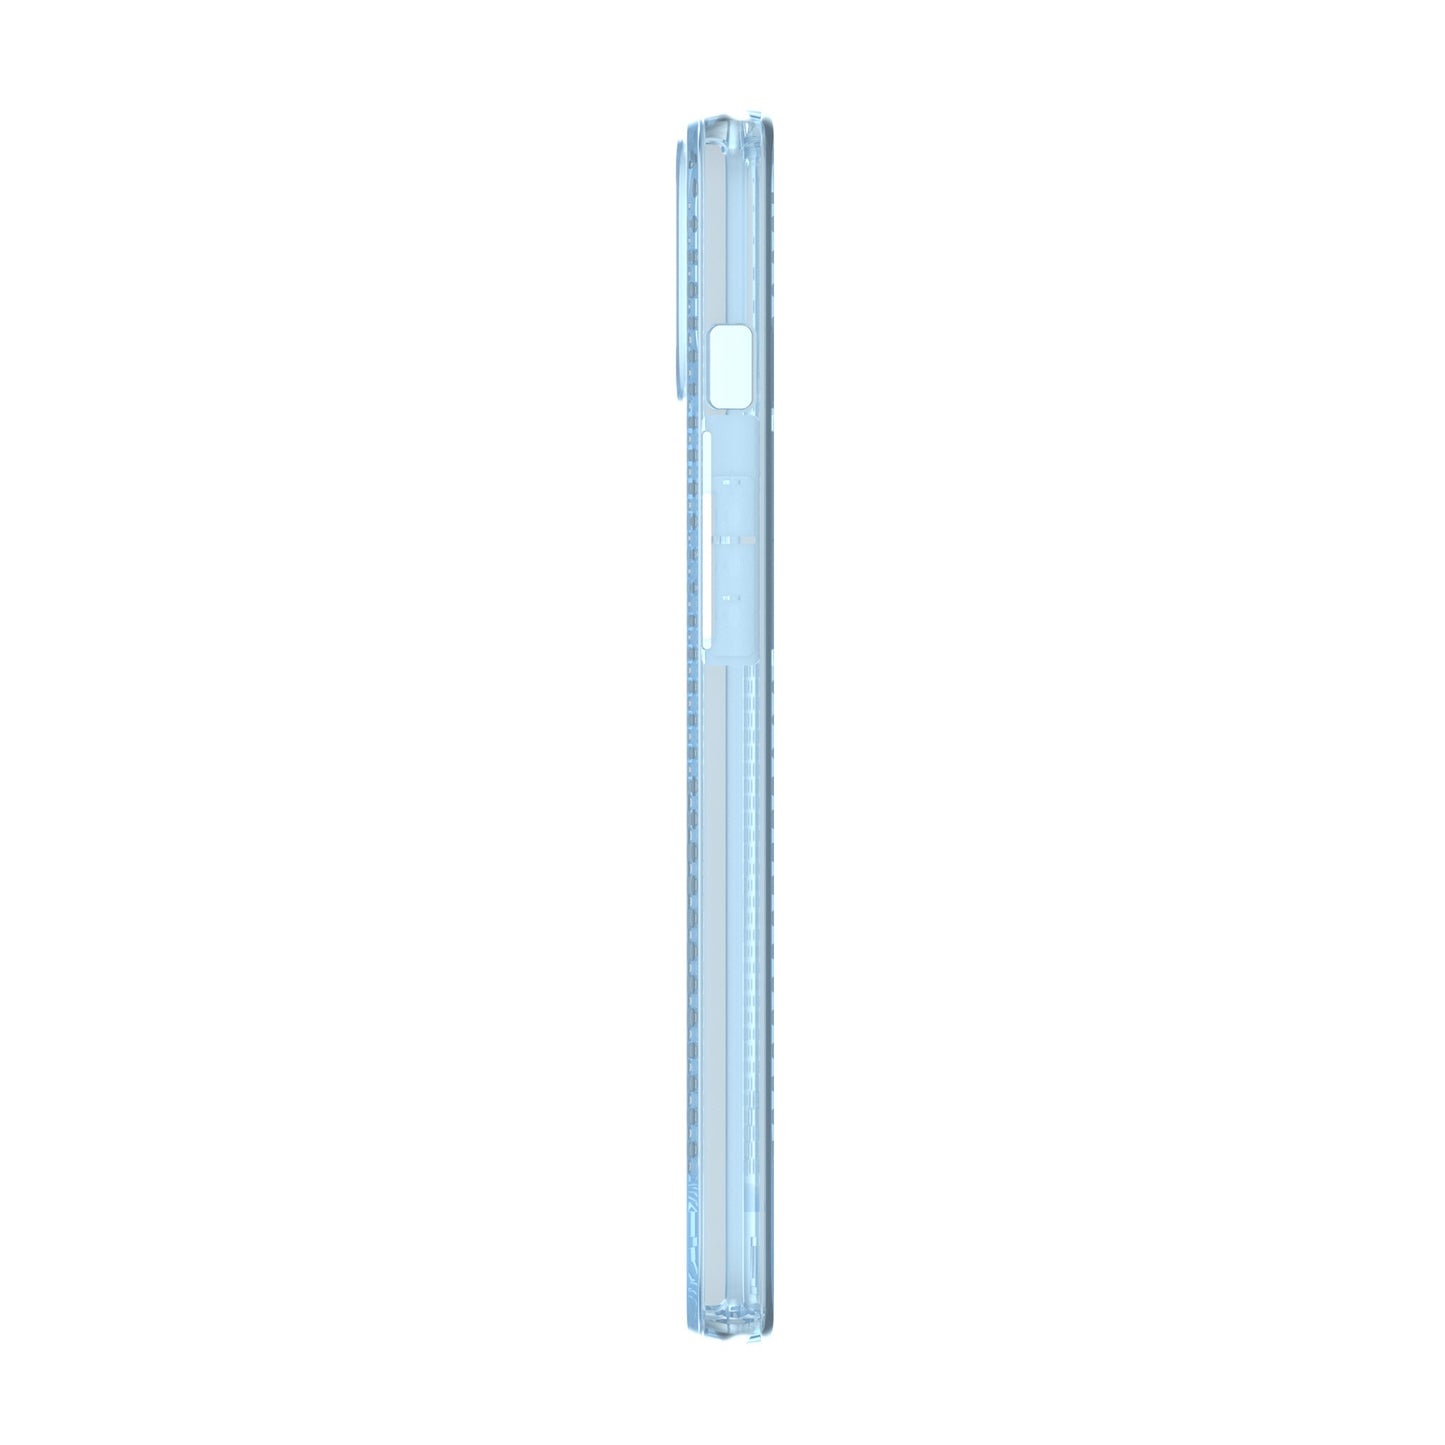 iPhone 13 UAG Blue (Cerulean) Lucent Case - 15-08961